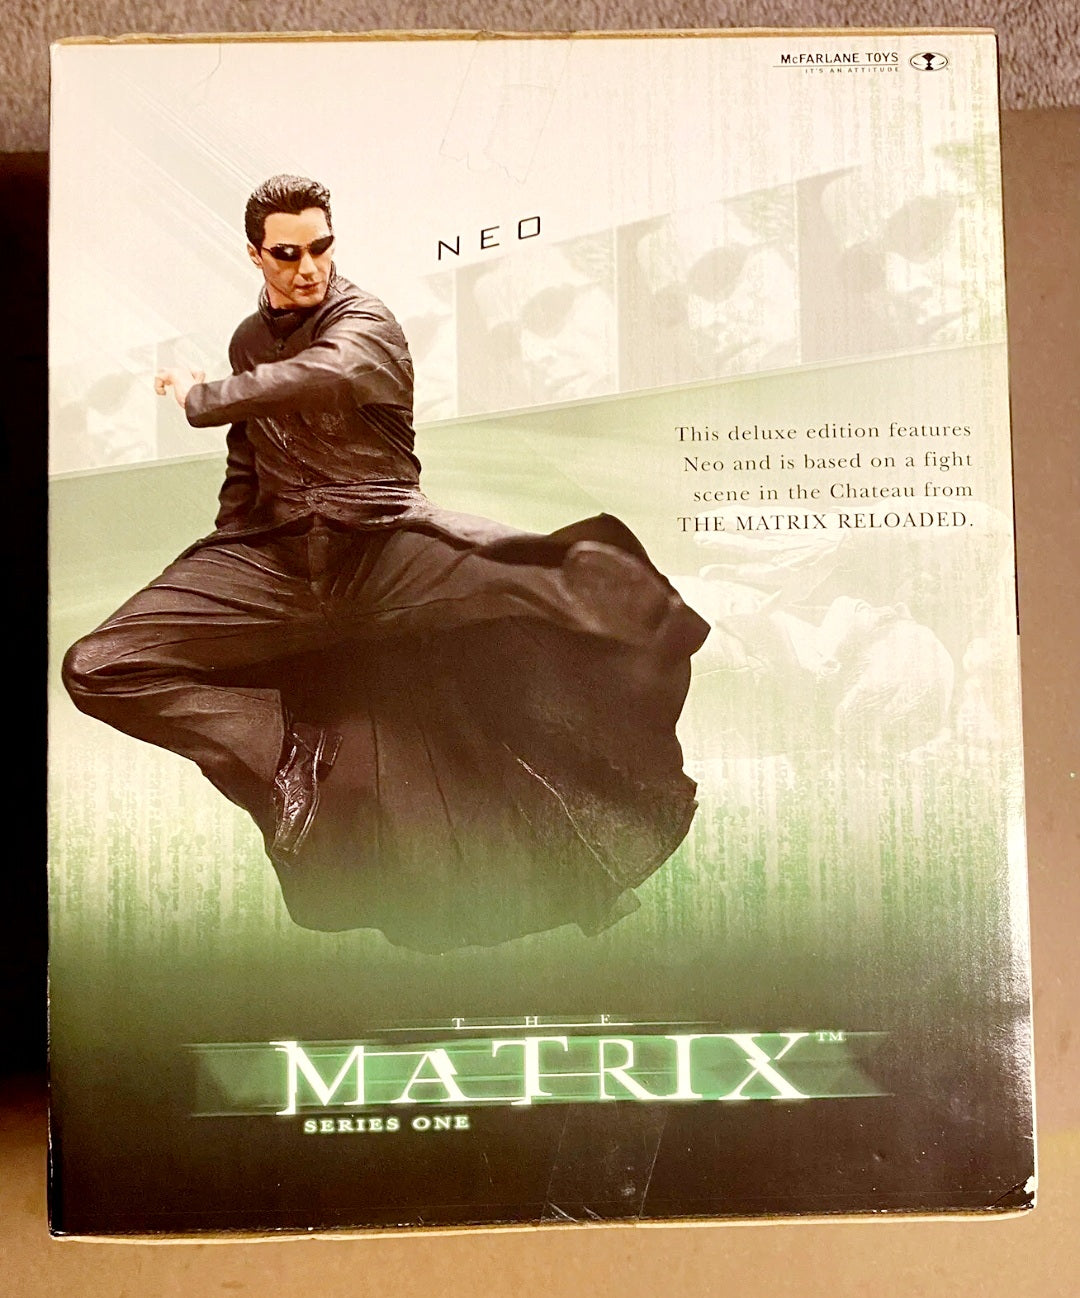 New *McFarlane Action Figures Matrix Series 1 Deluxe Box Set "Neo Chateau Scene"